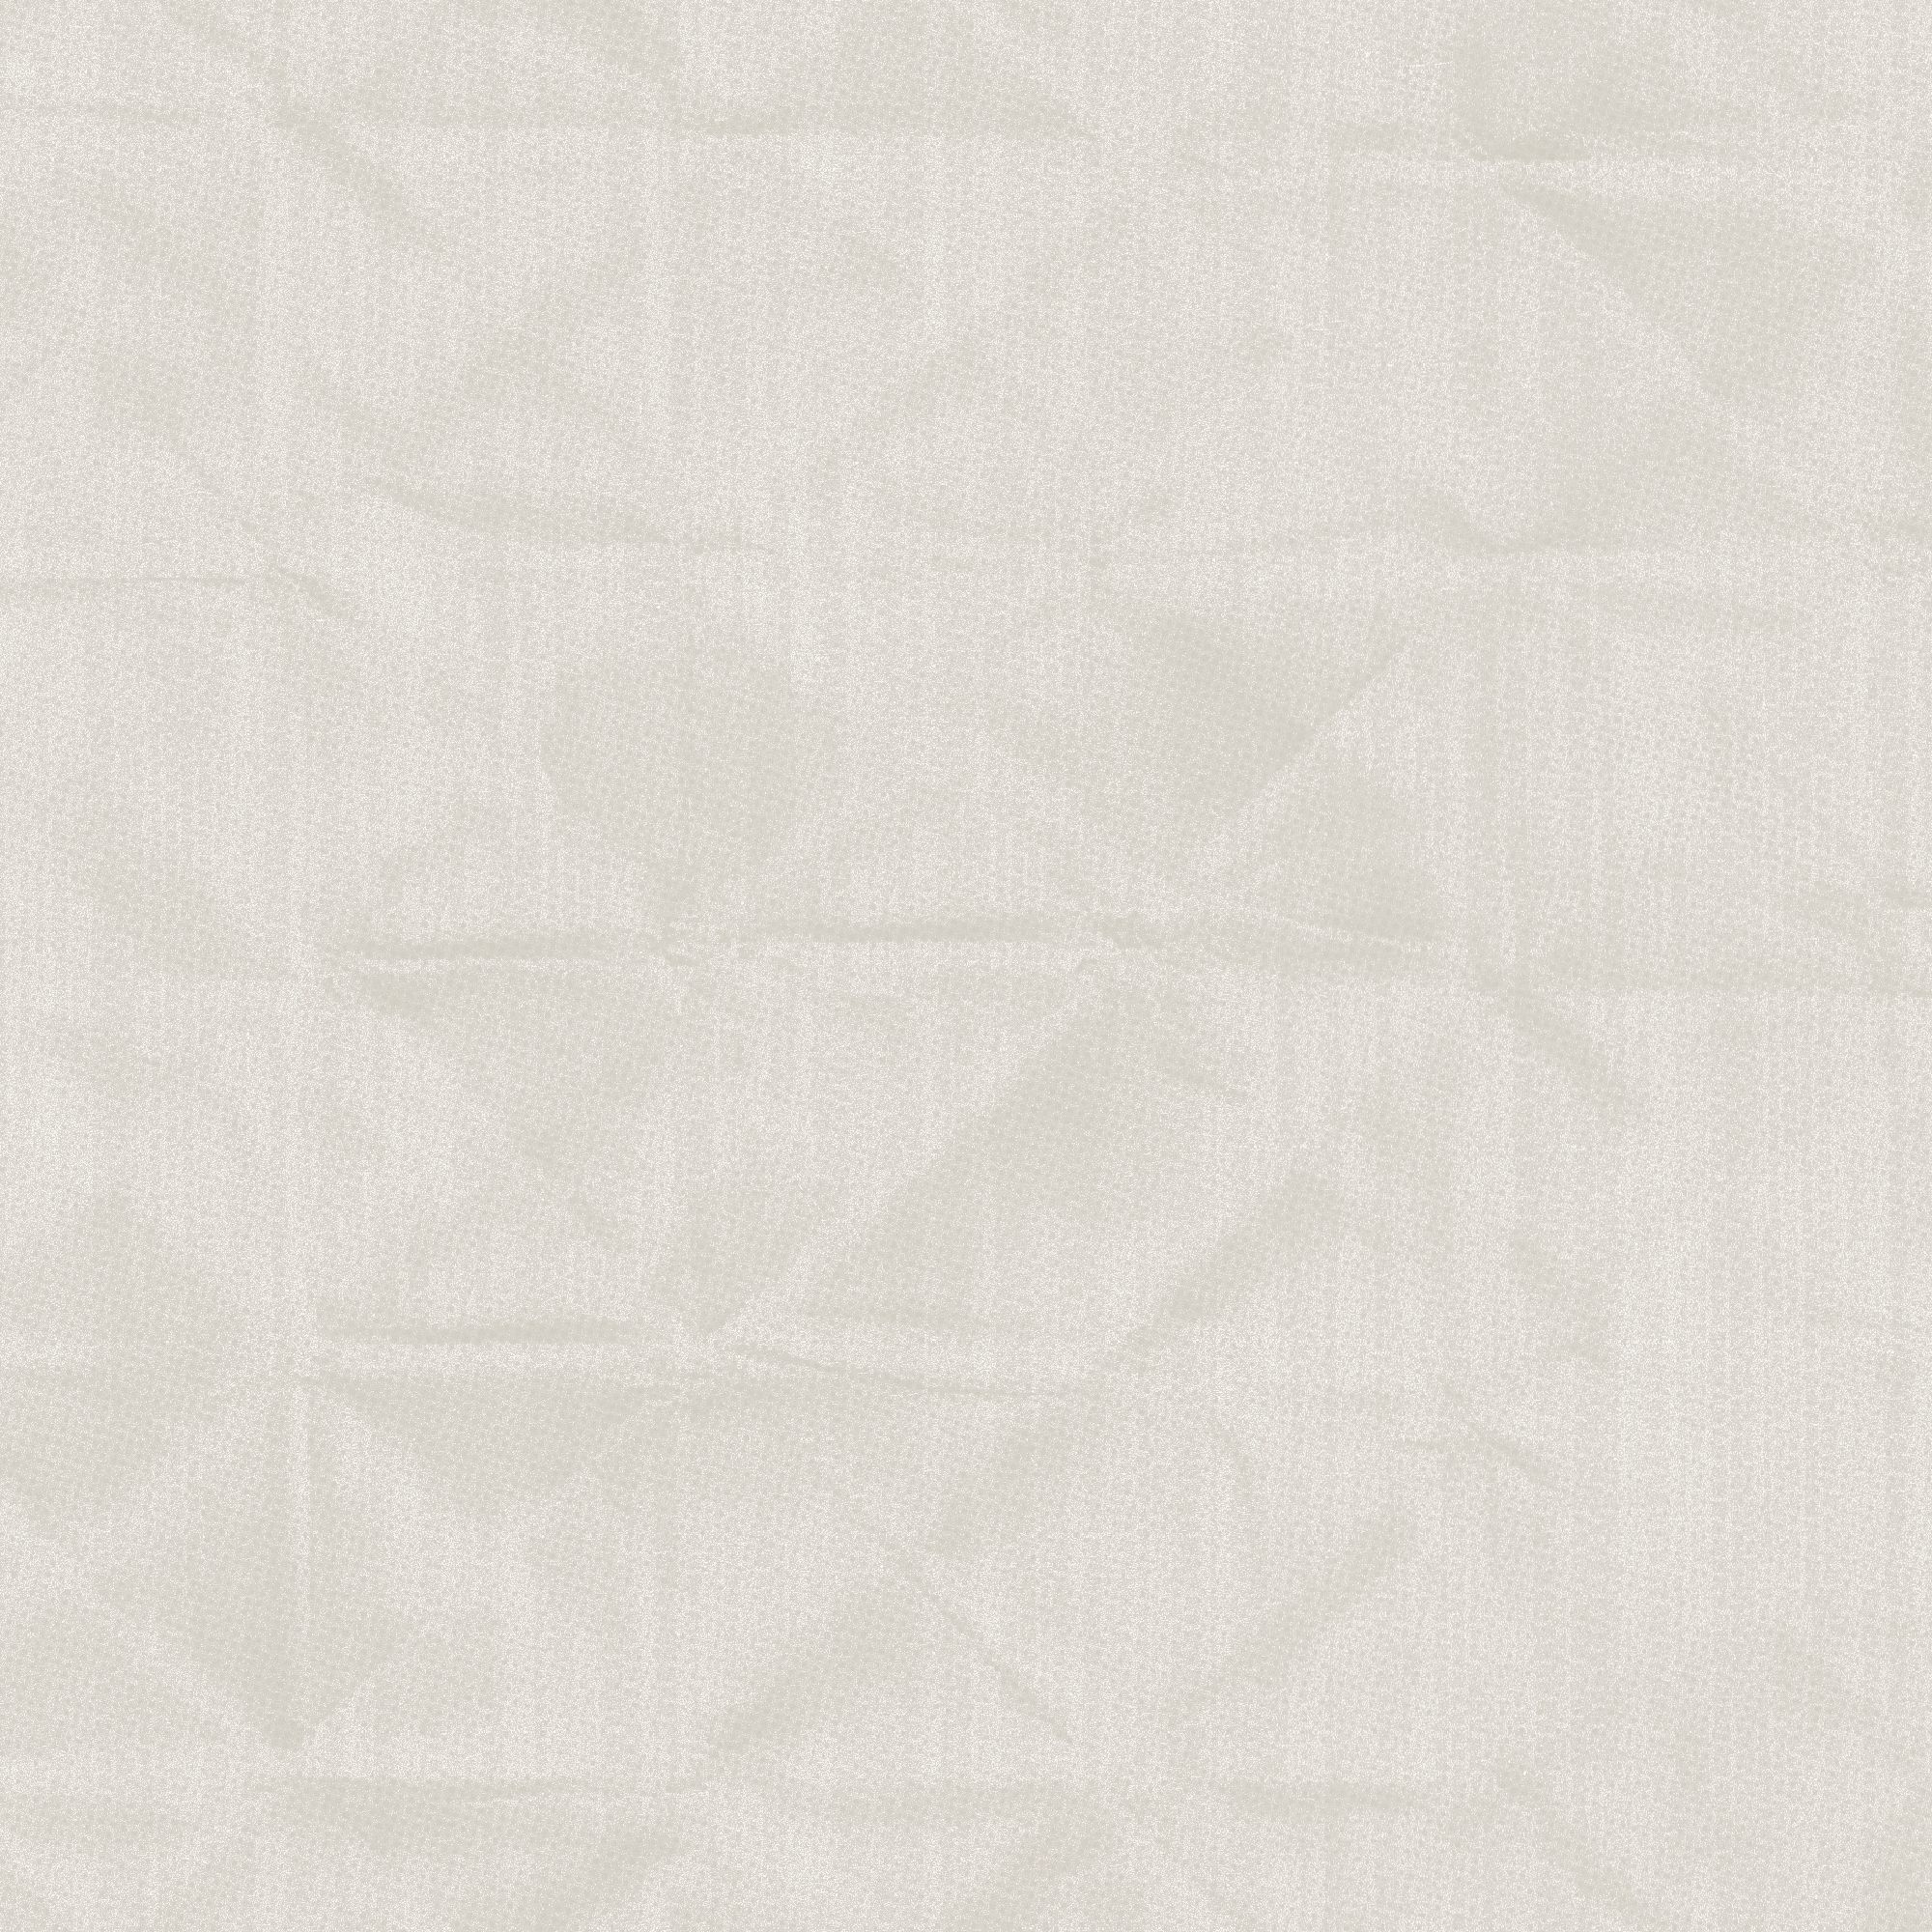 GoodHome Auve Light beige Origami art Textured Wallpaper Sample